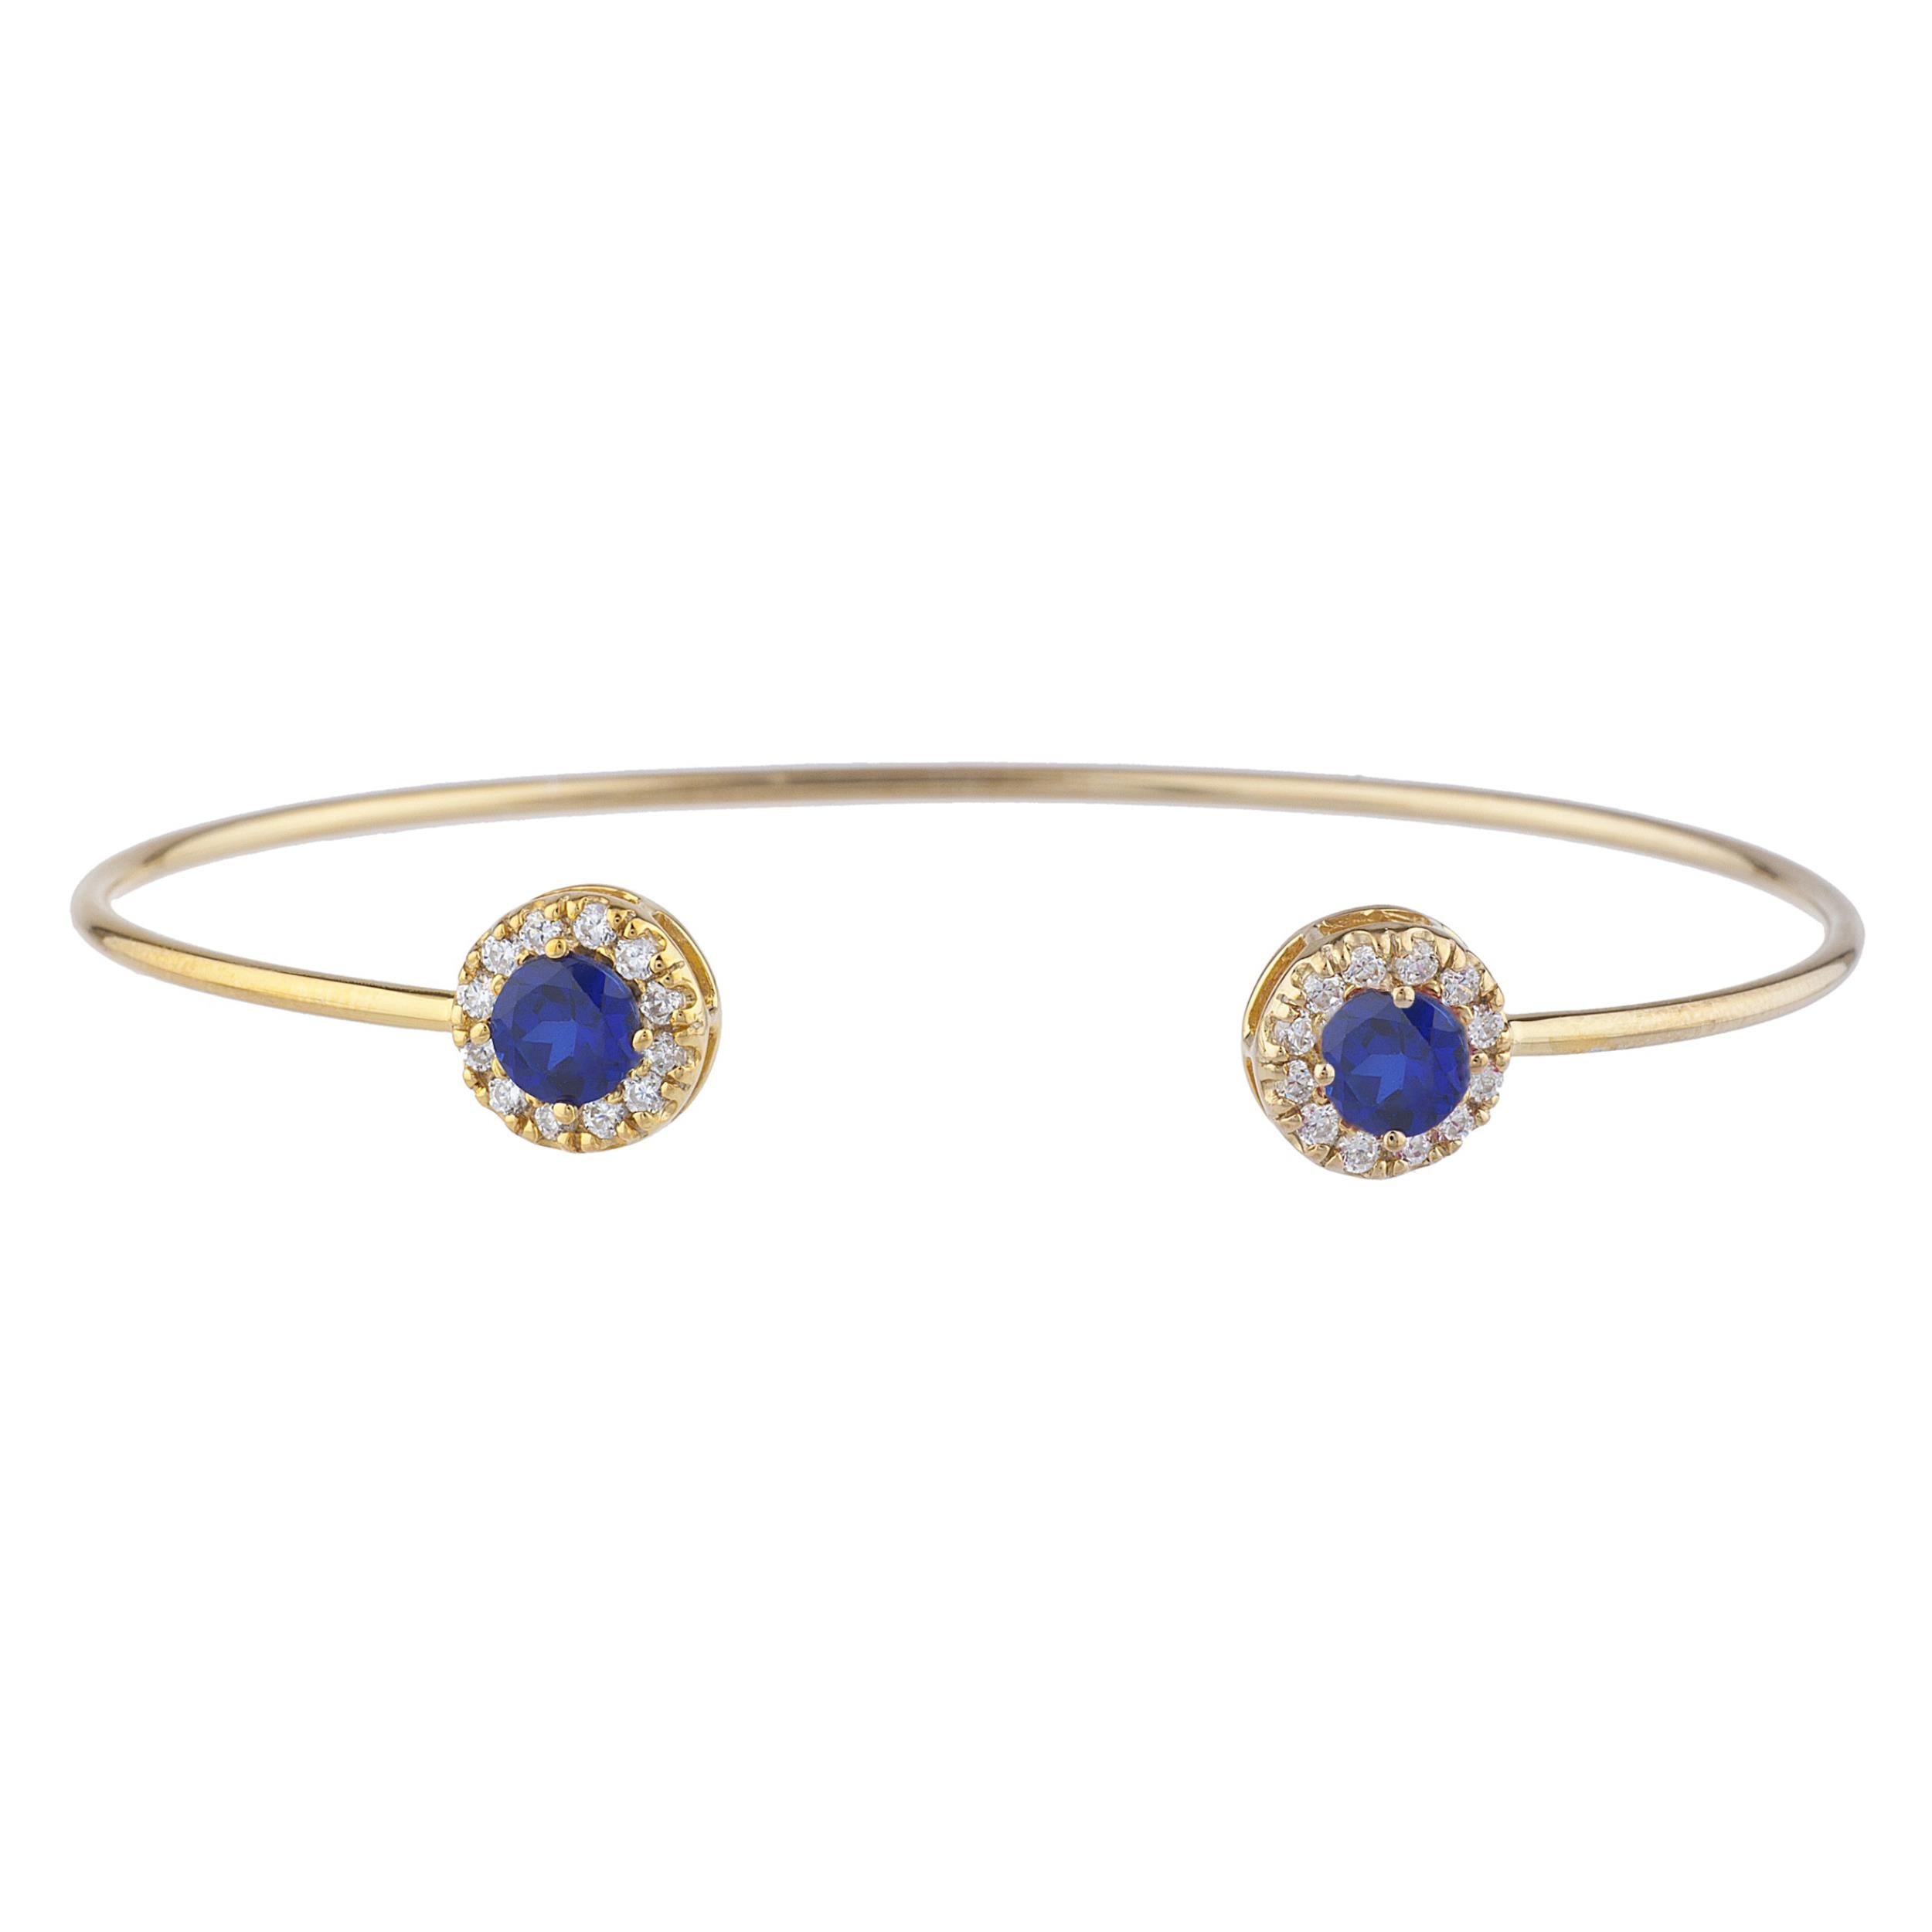 1 Ct Blue Sapphire Halo Design Round Bangle Bracelet 14Kt Yellow Gold Rose Gold Silver